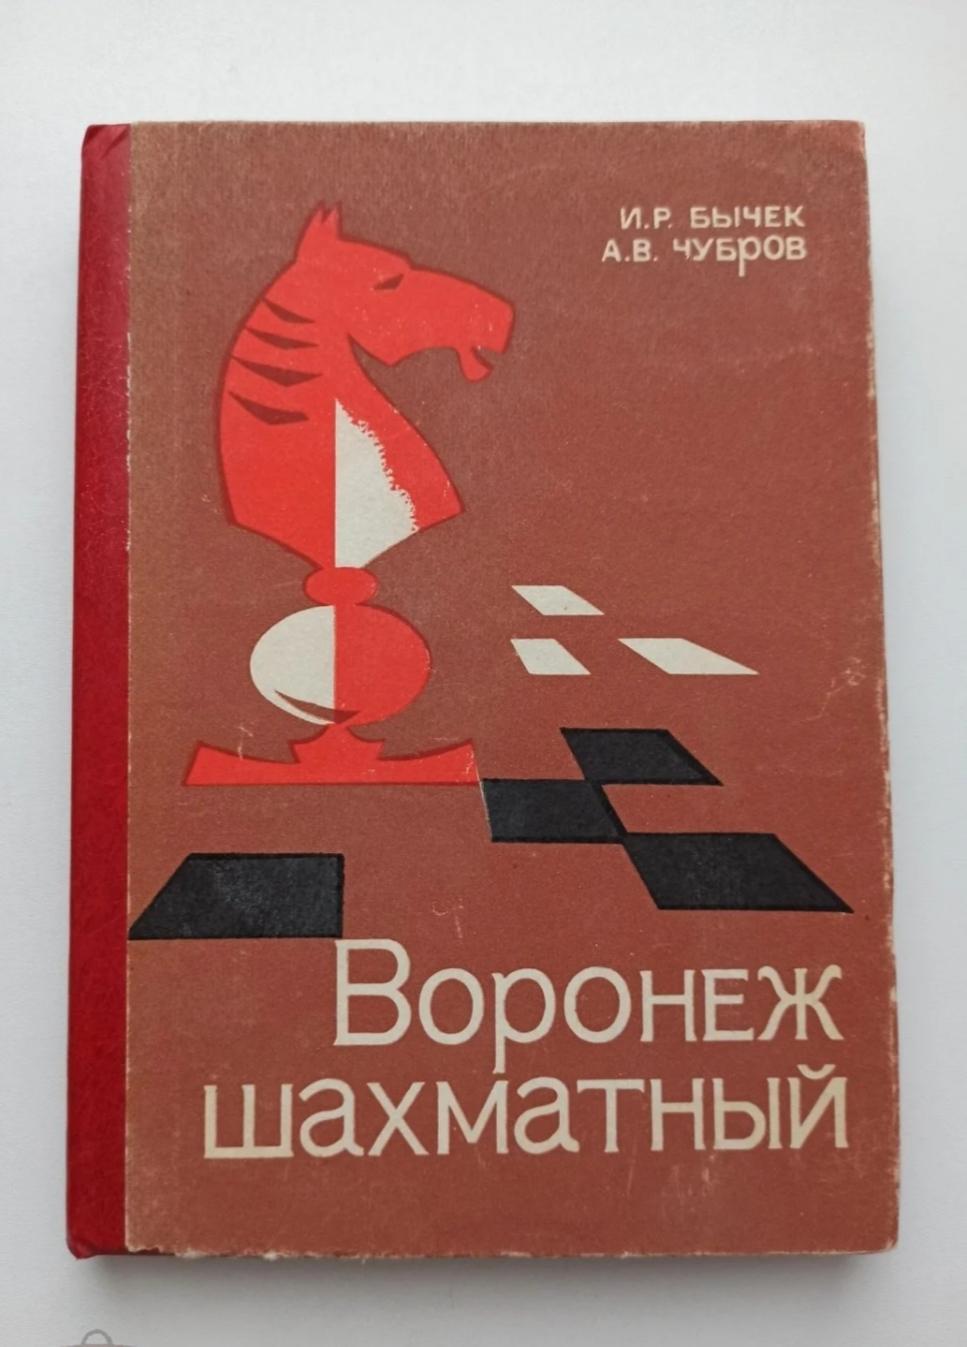 Шахматы СССР, Бычек, Чубров, Воронеж шахматный, 1981г.